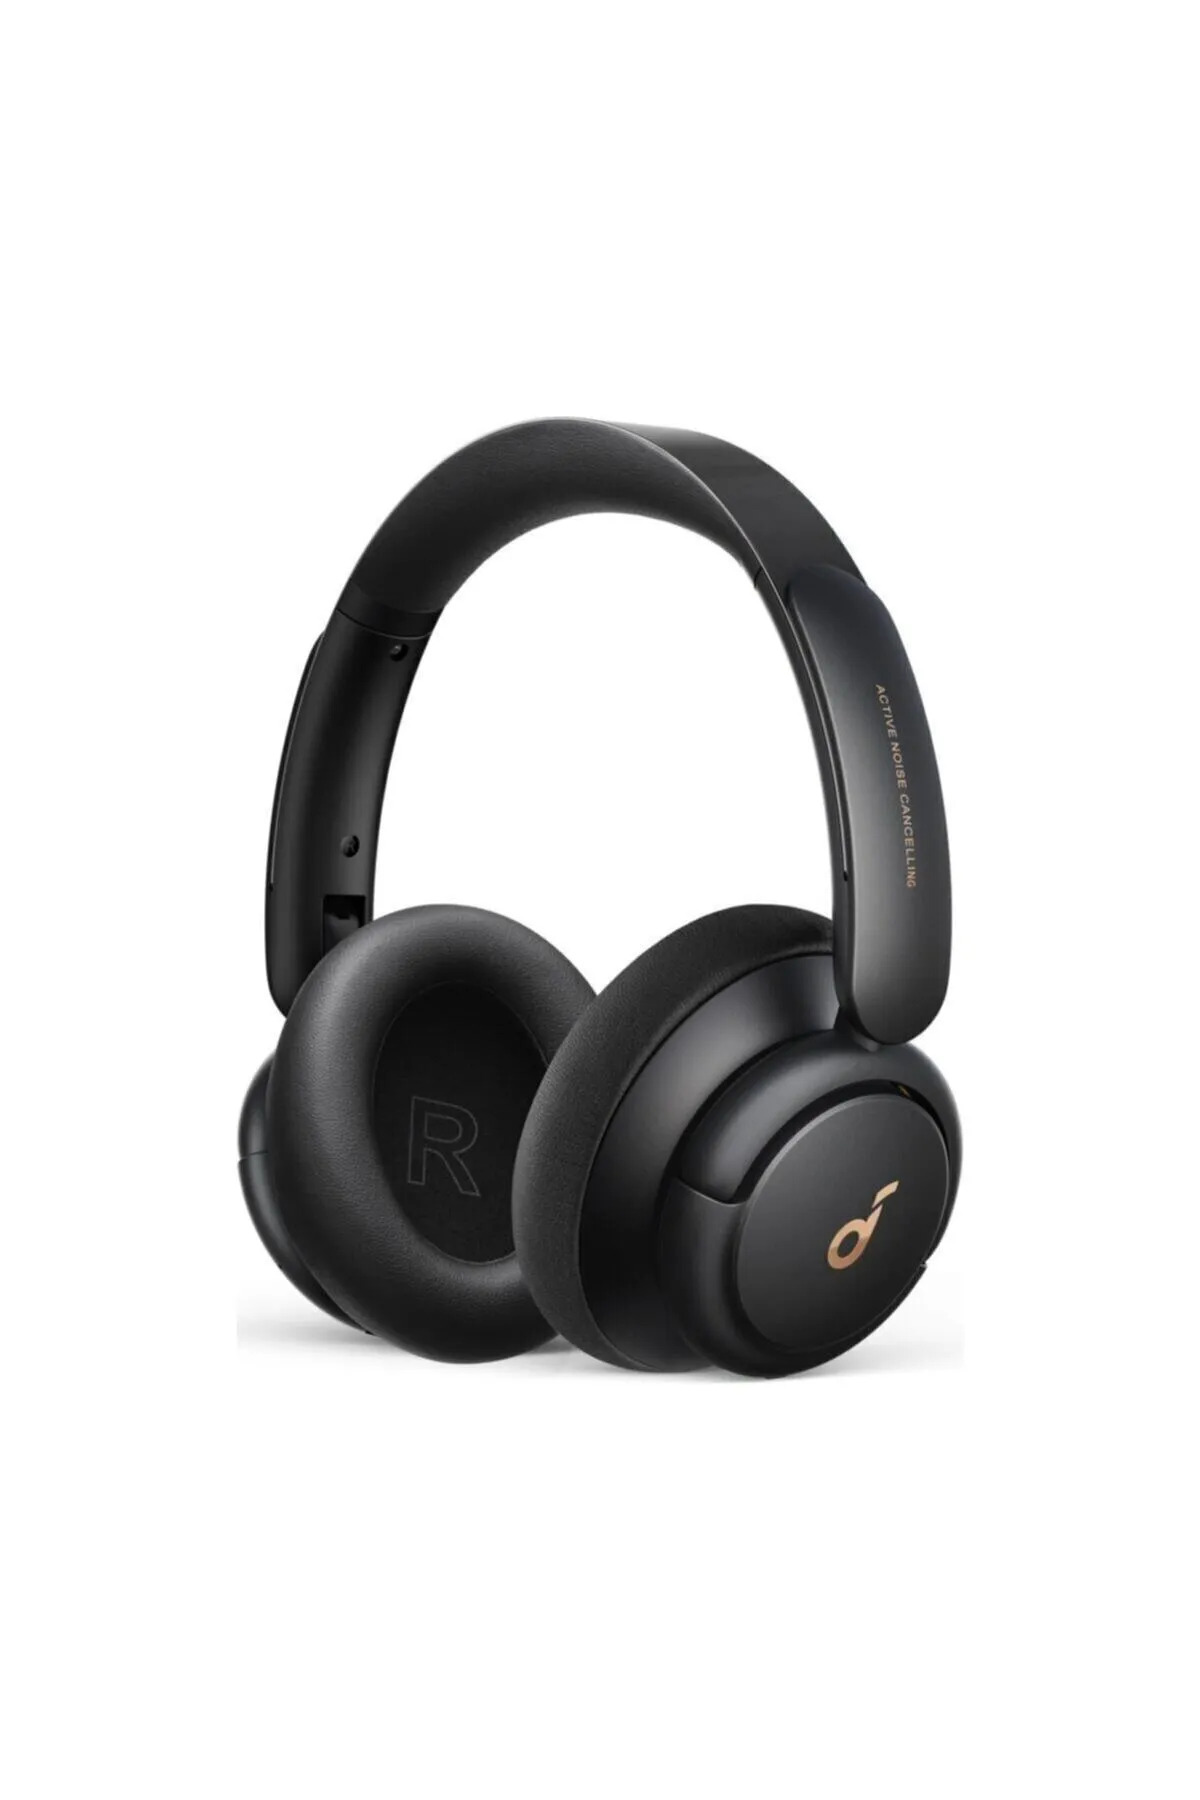 ANKER Soundcore Life Q20i Kablosuz Hibrit NC Bluetooth Kulak Üstü Kulaklık  Siyah Fiyatı & Özellikleri